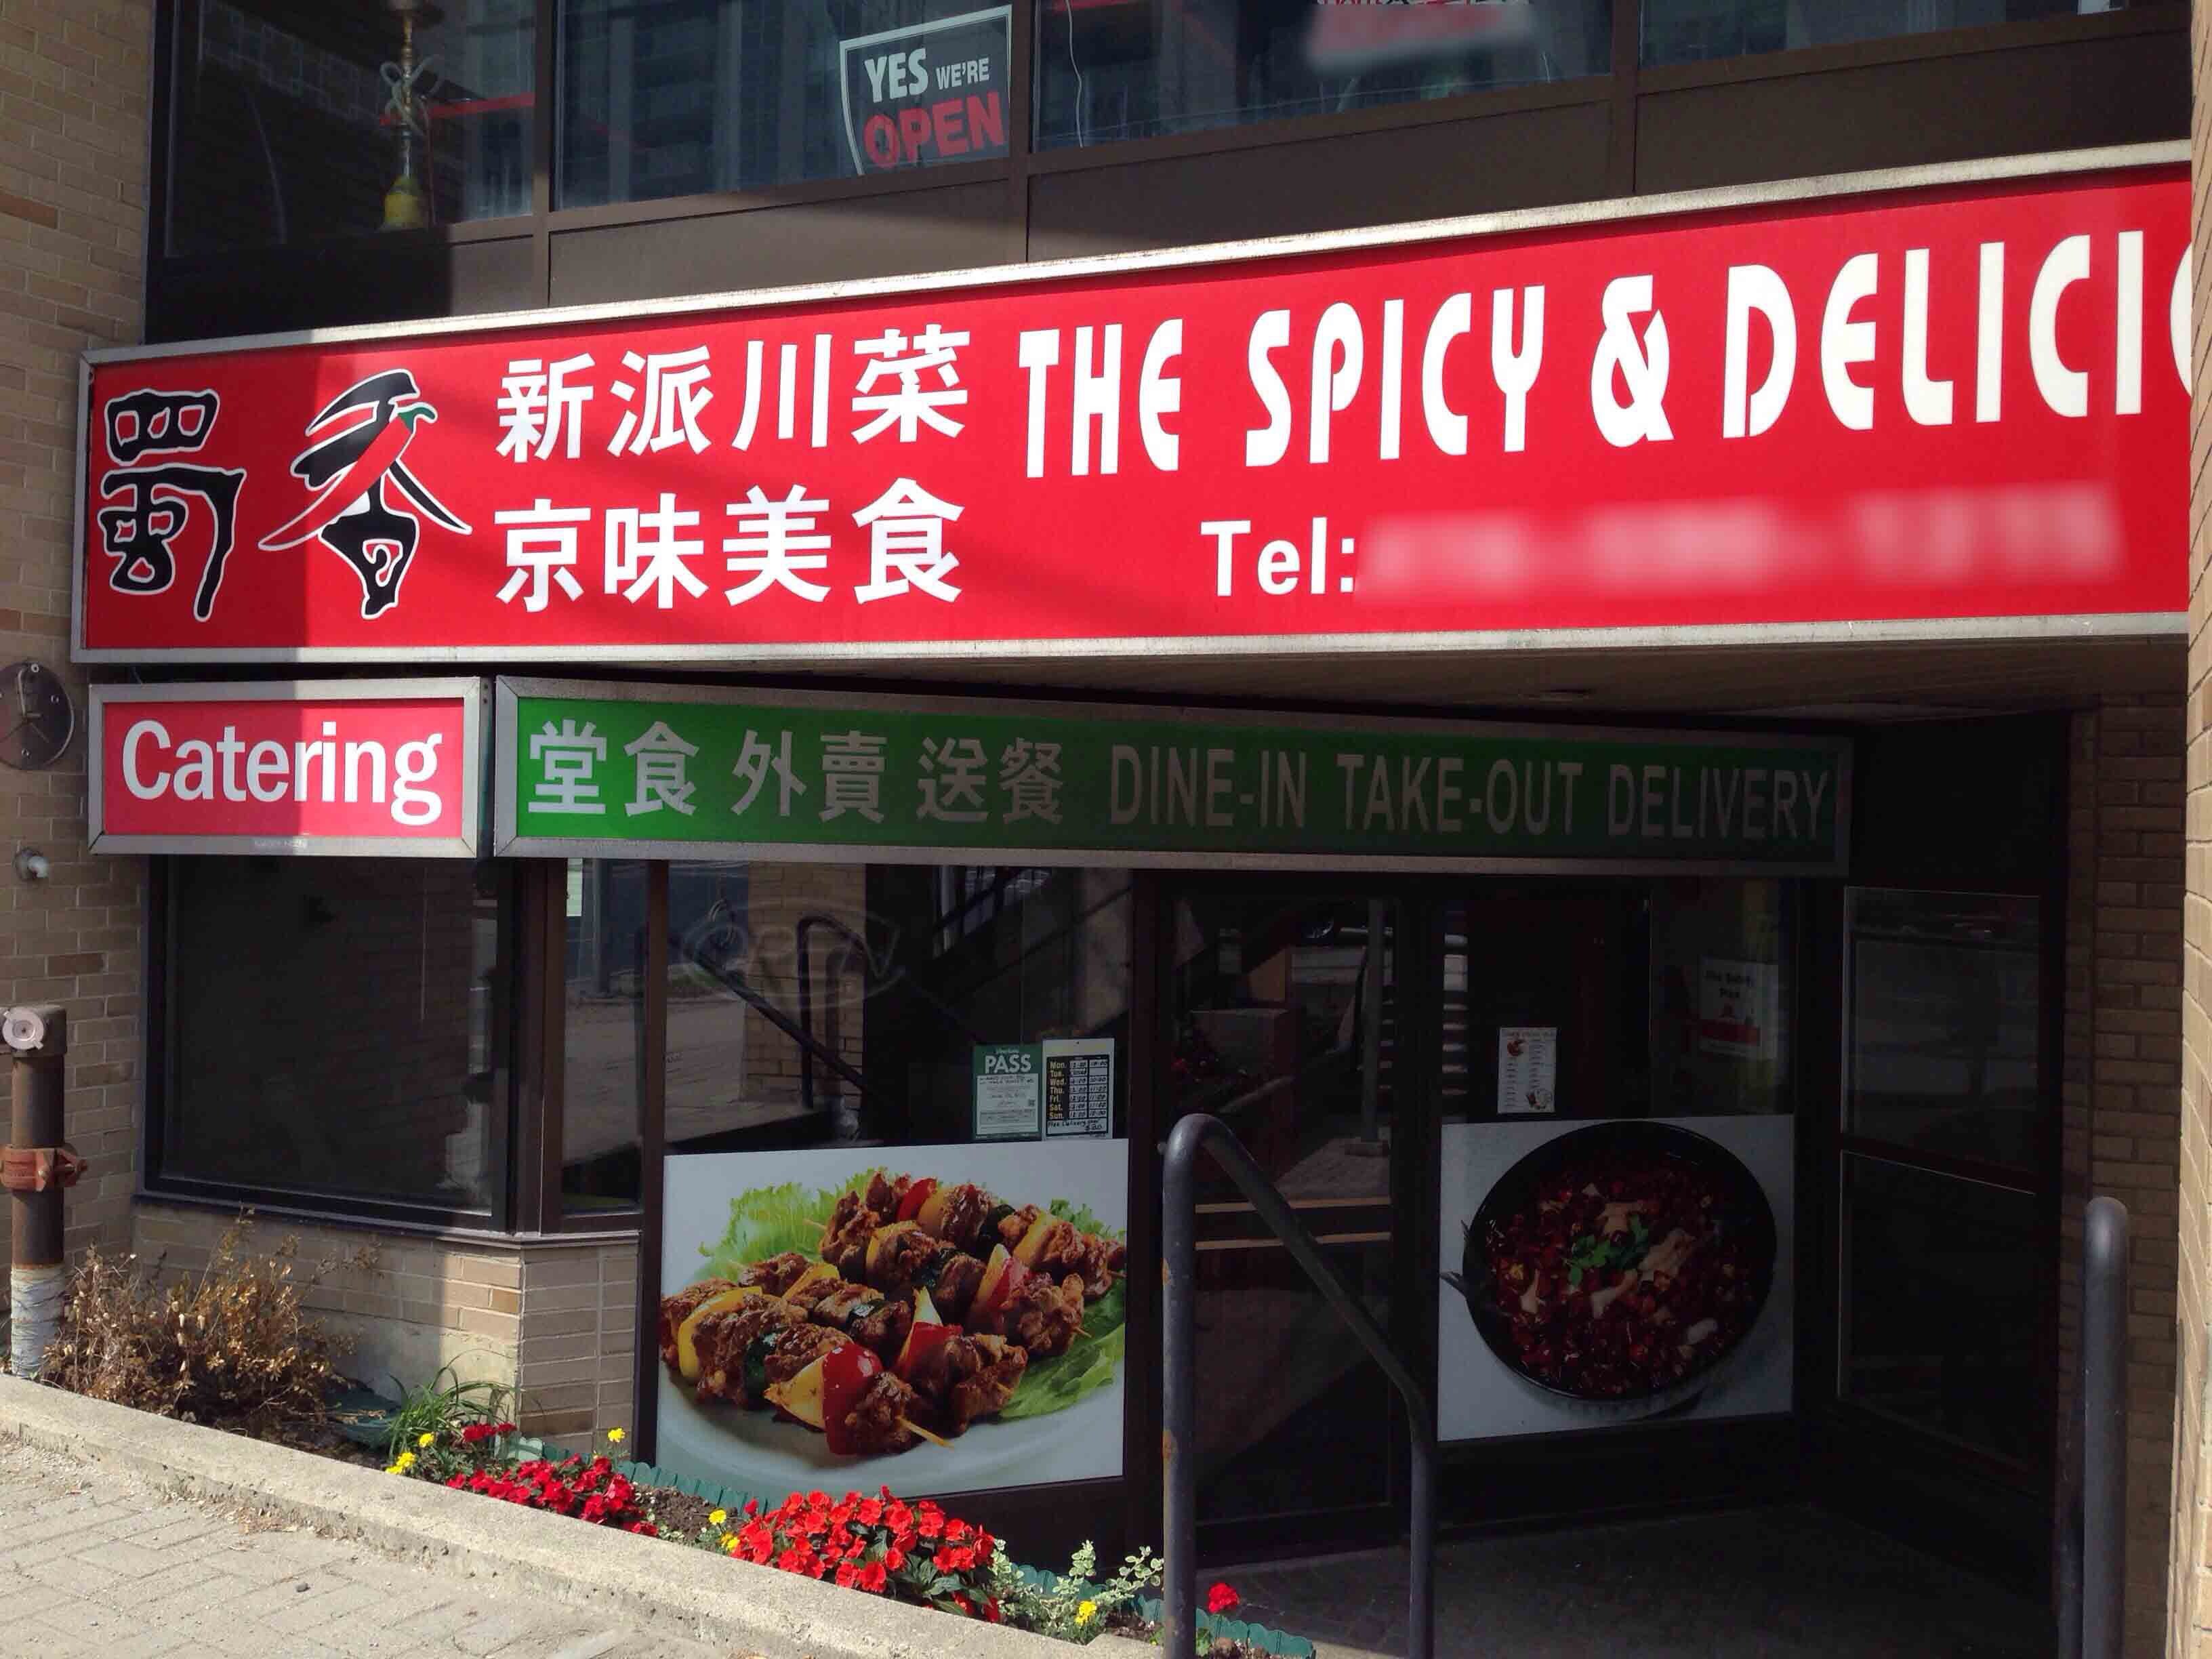 The Spicy & Delicious